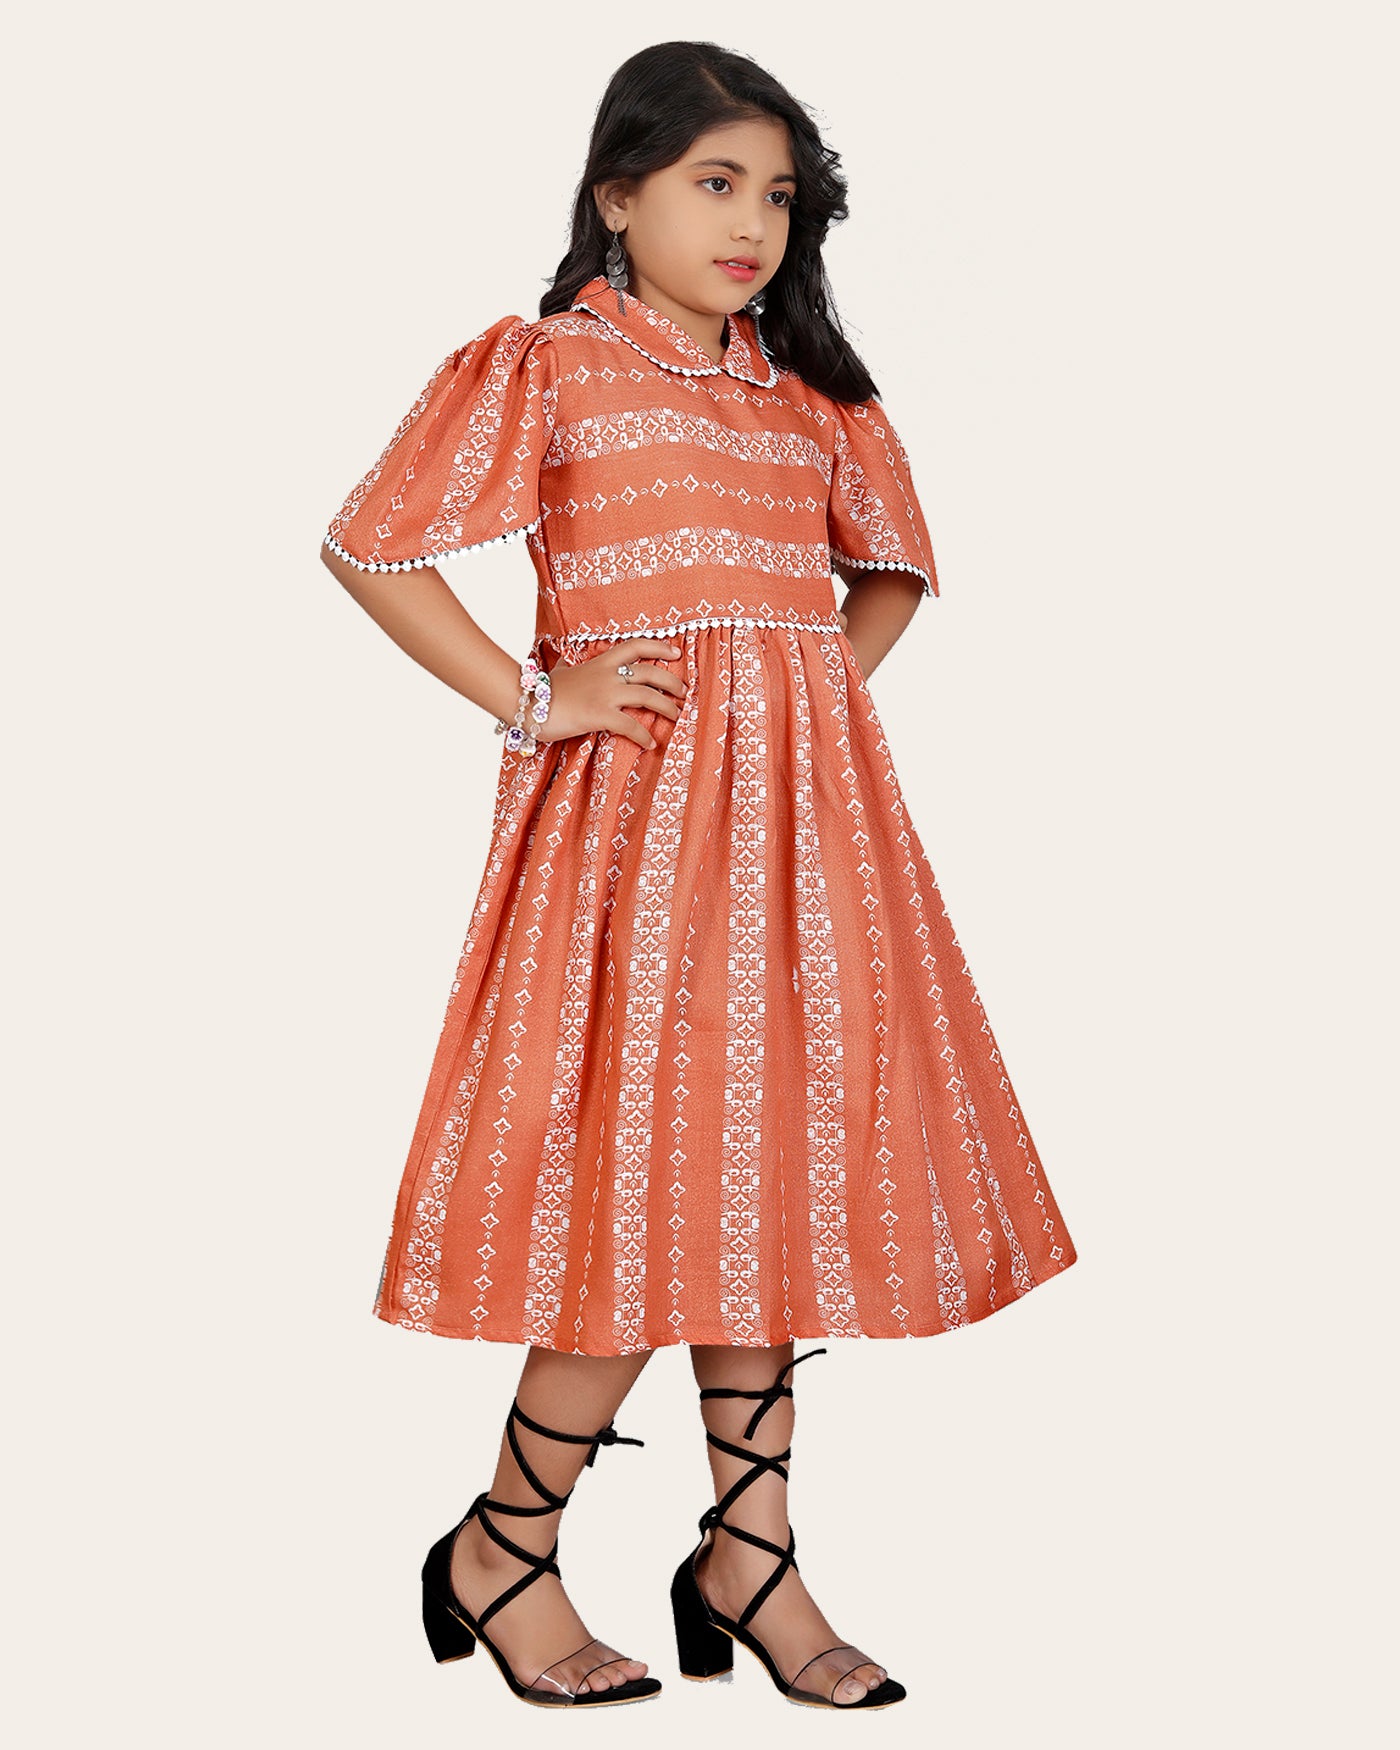 Girl's Cotton Unique Design Printed Knee Length A-Line Dress